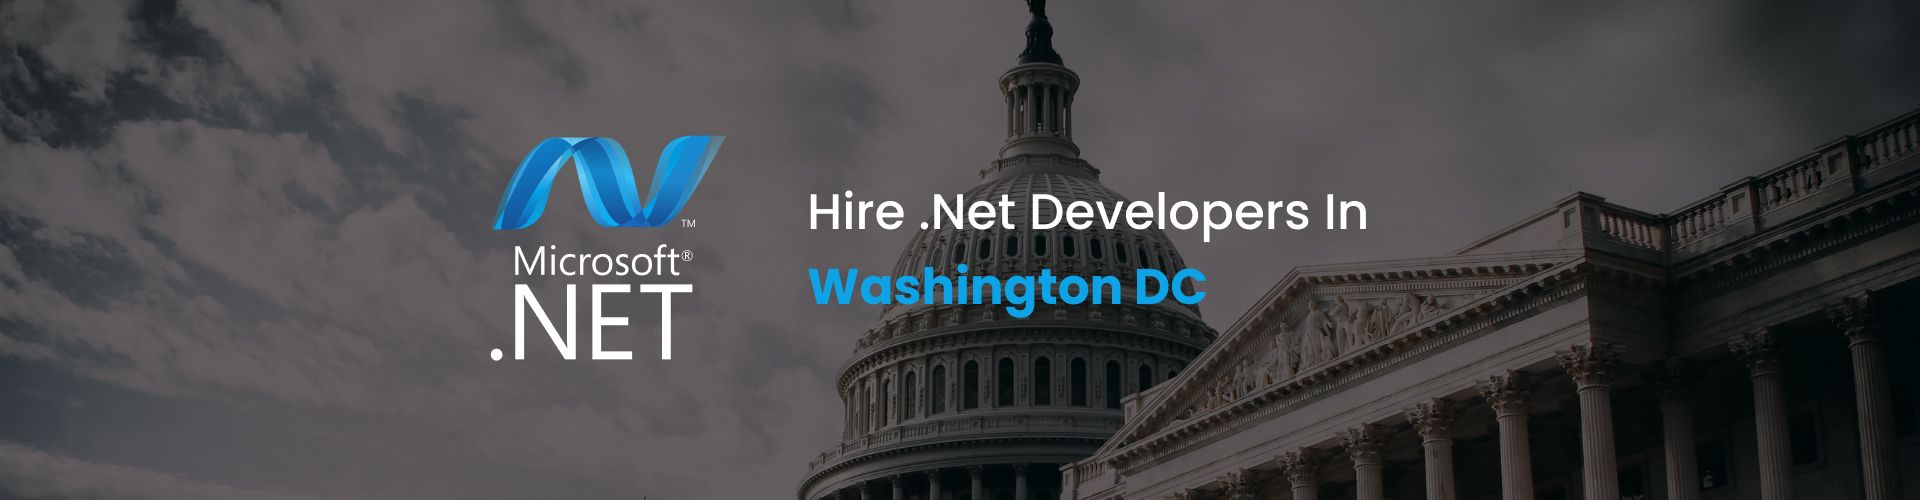 hire dot net developers in washington dc